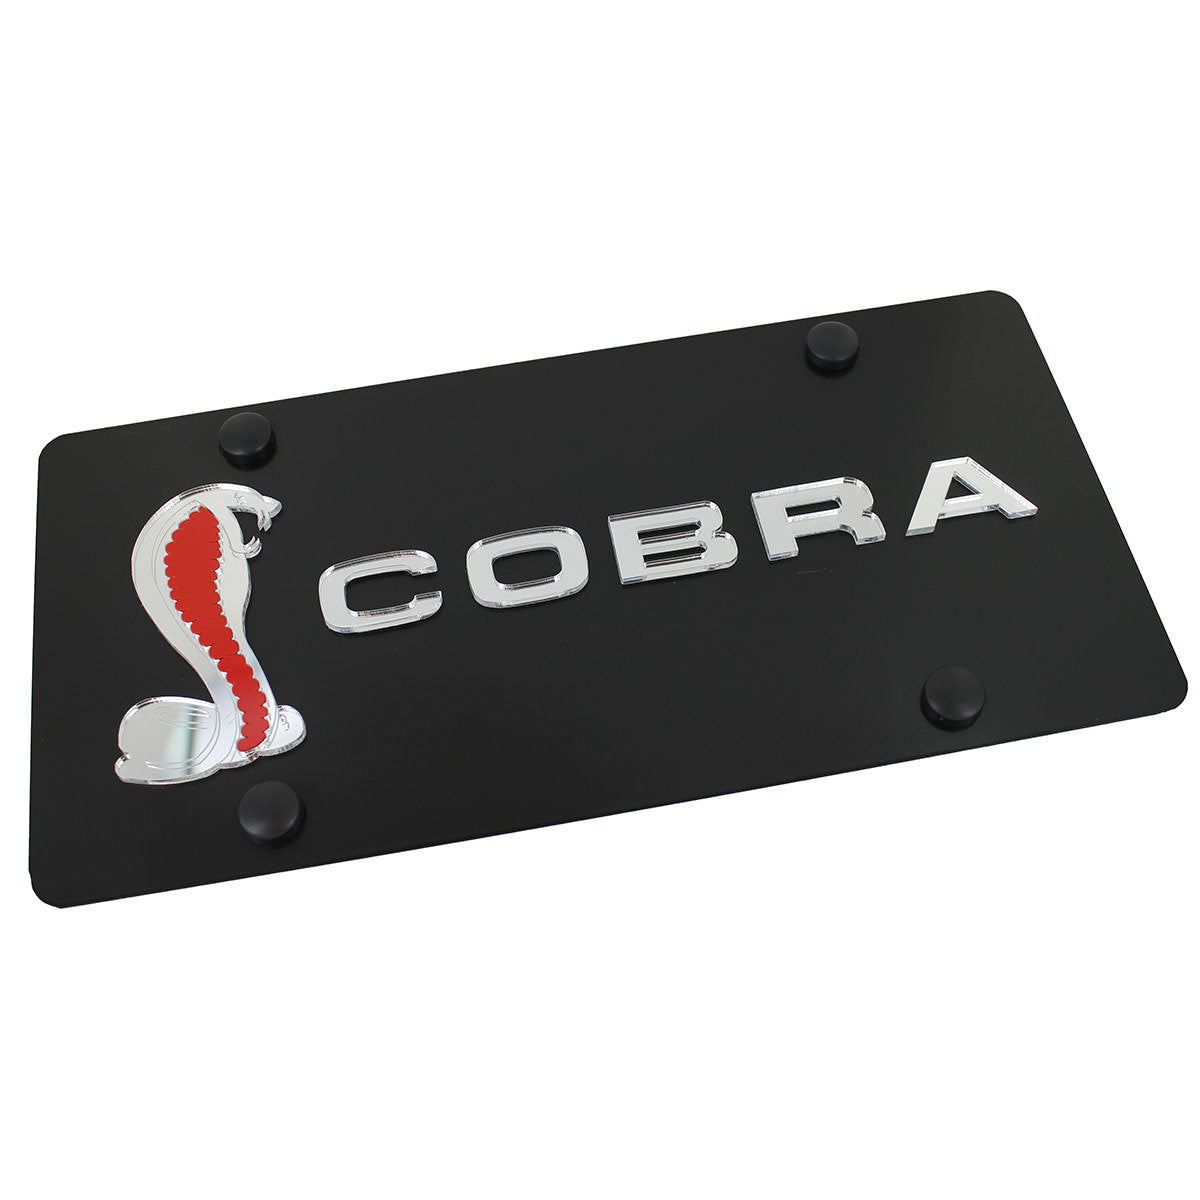 Ford Cobra License Plate